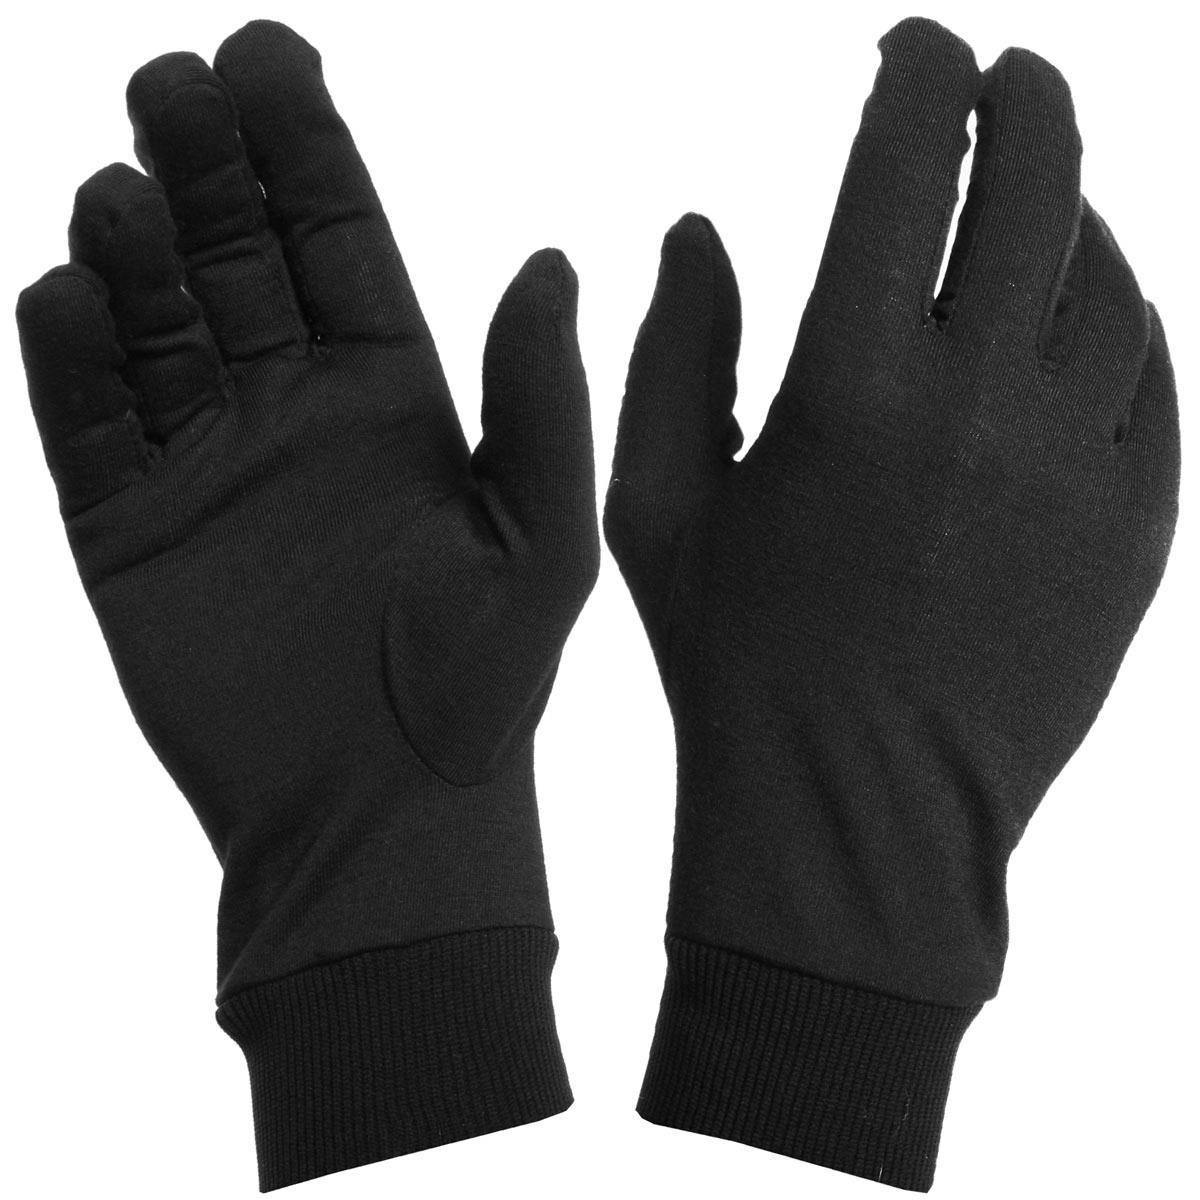 Winter's Edge Glove Liner